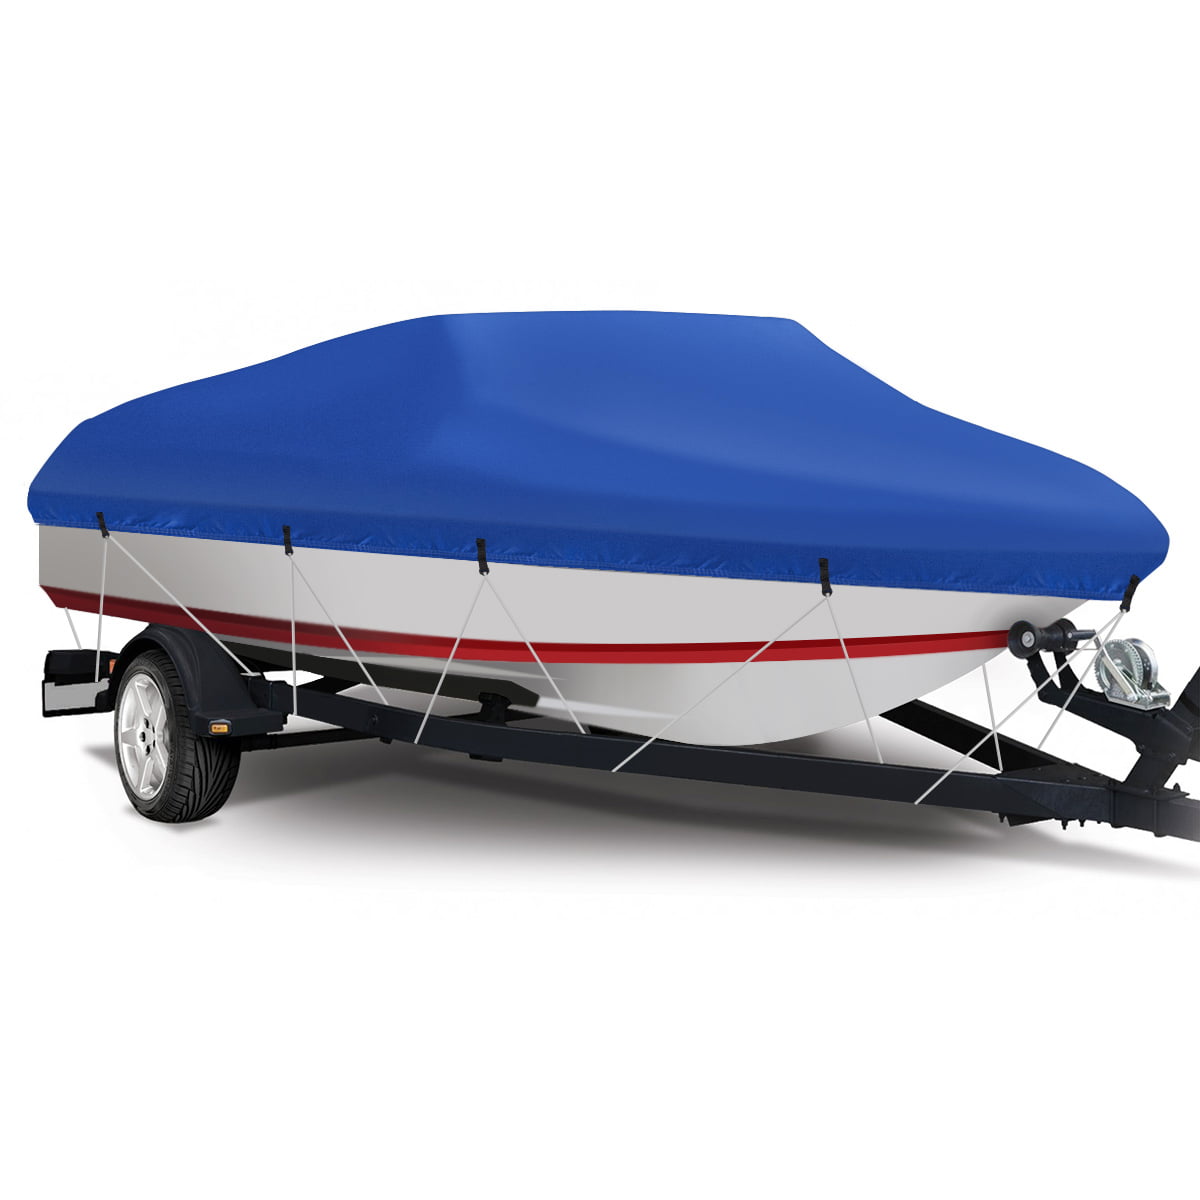 MASO Trailerable Boat Cover,Heavy Duty 20-22ft 210D UV Protected Waterproof yacht Speedboat Fish-Ski V-Hull Cover Bag